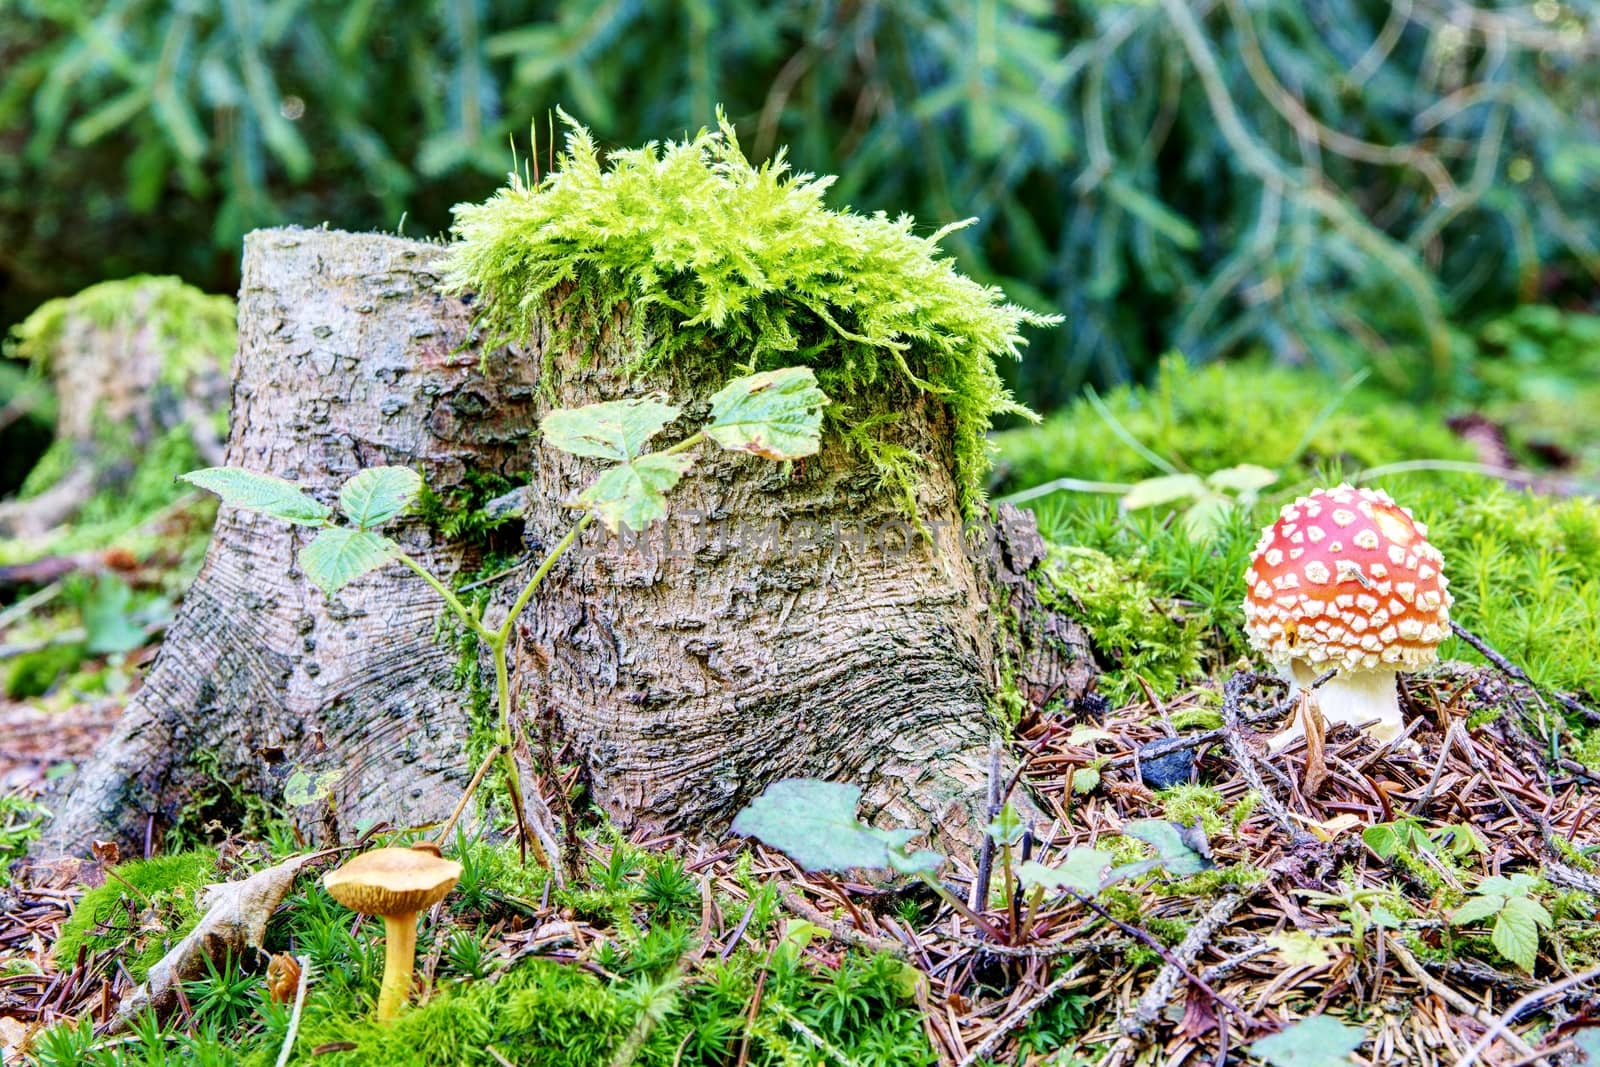 Mushrooms in the wood by Dermot68